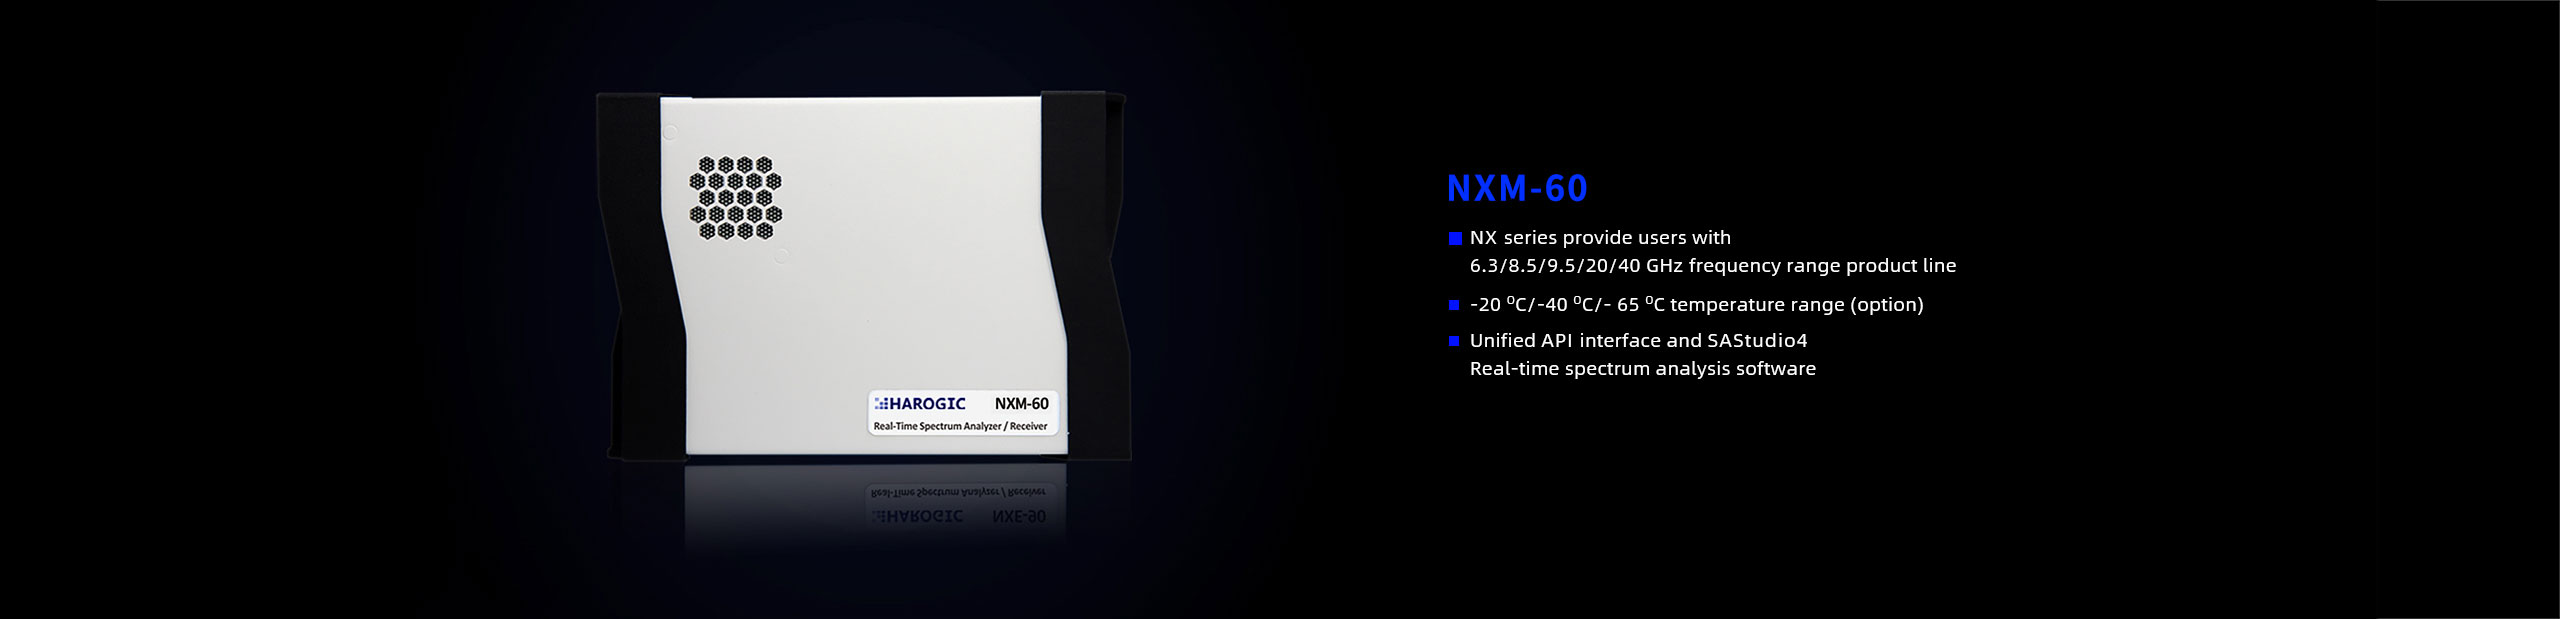 NXM-606.3 GHz Network Node Spectrum Analyzer